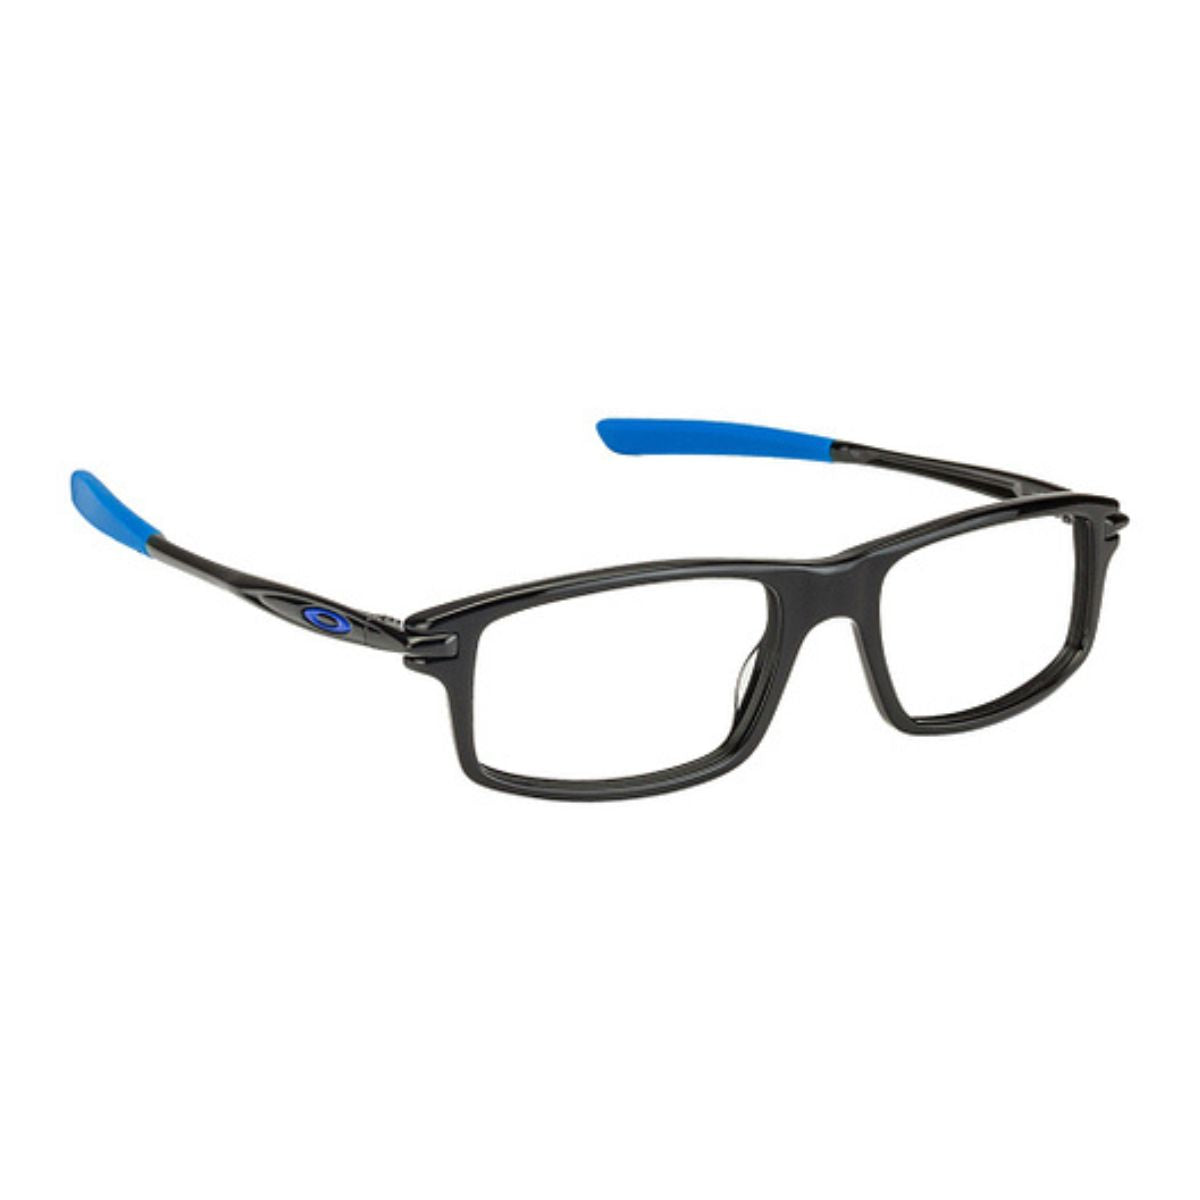 "best Oakley 1100 0453 optical eyewear frame for men's at optorium"